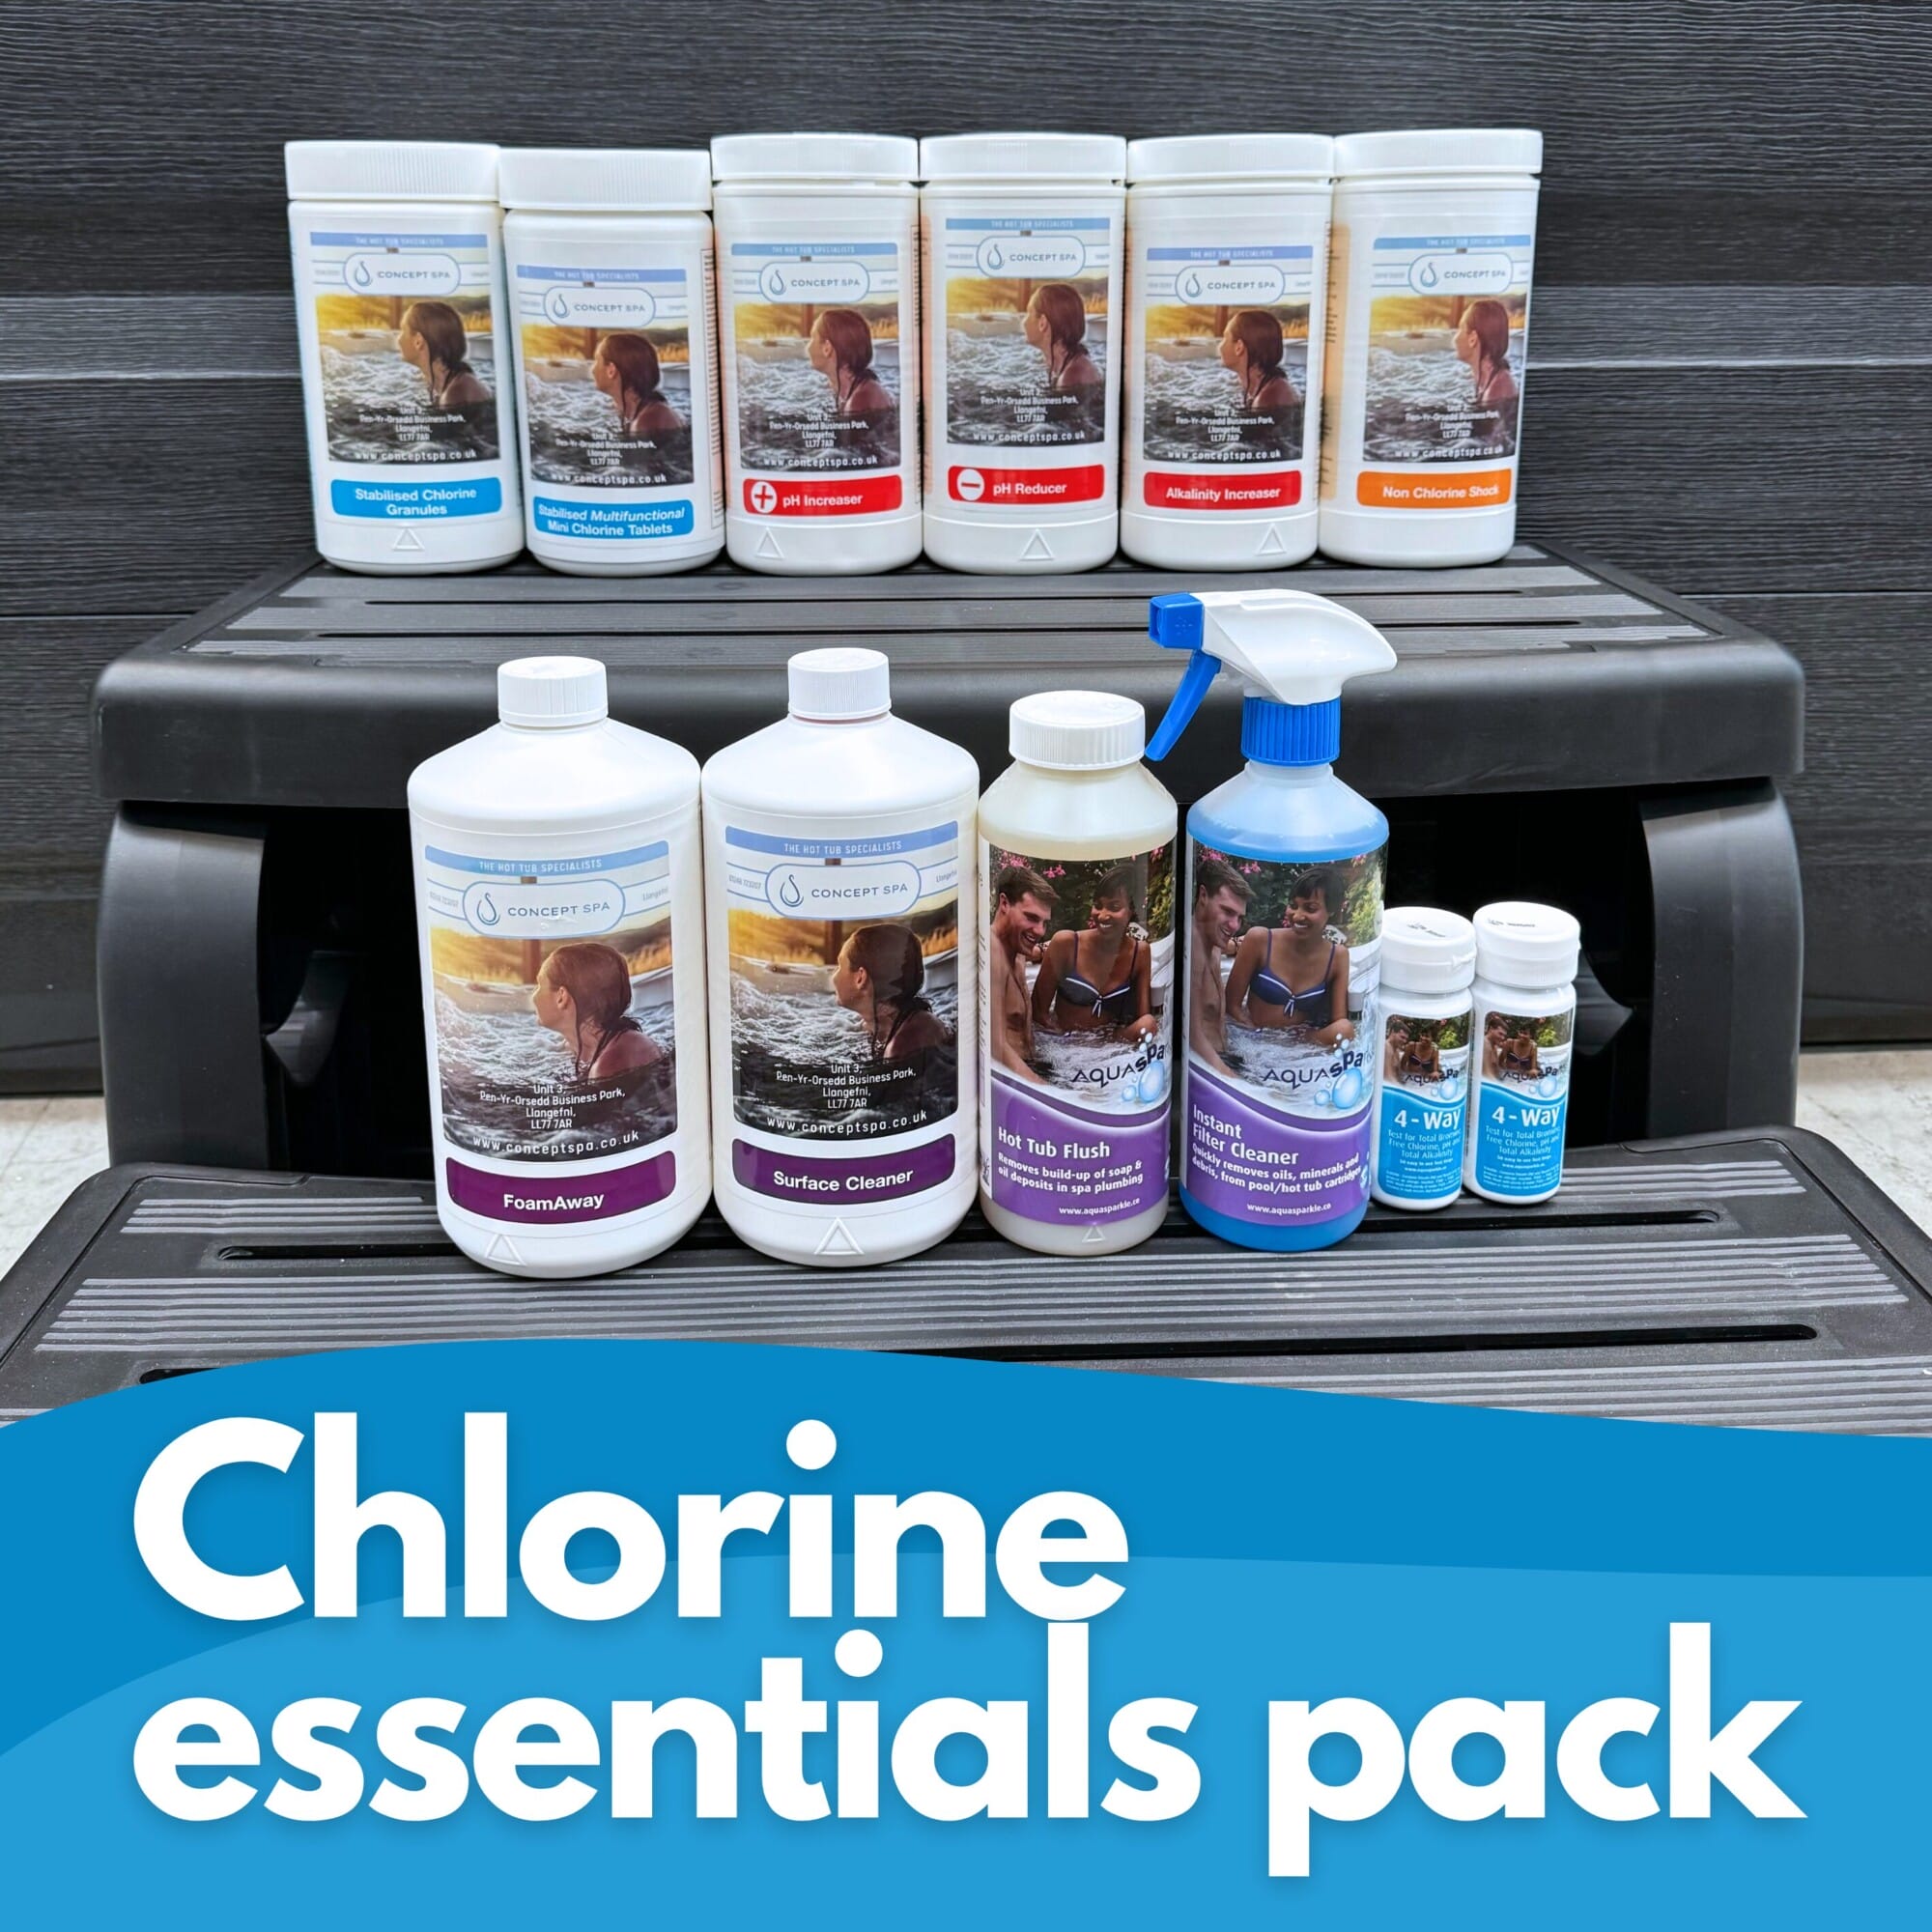 Chlorine essentials chemical pack